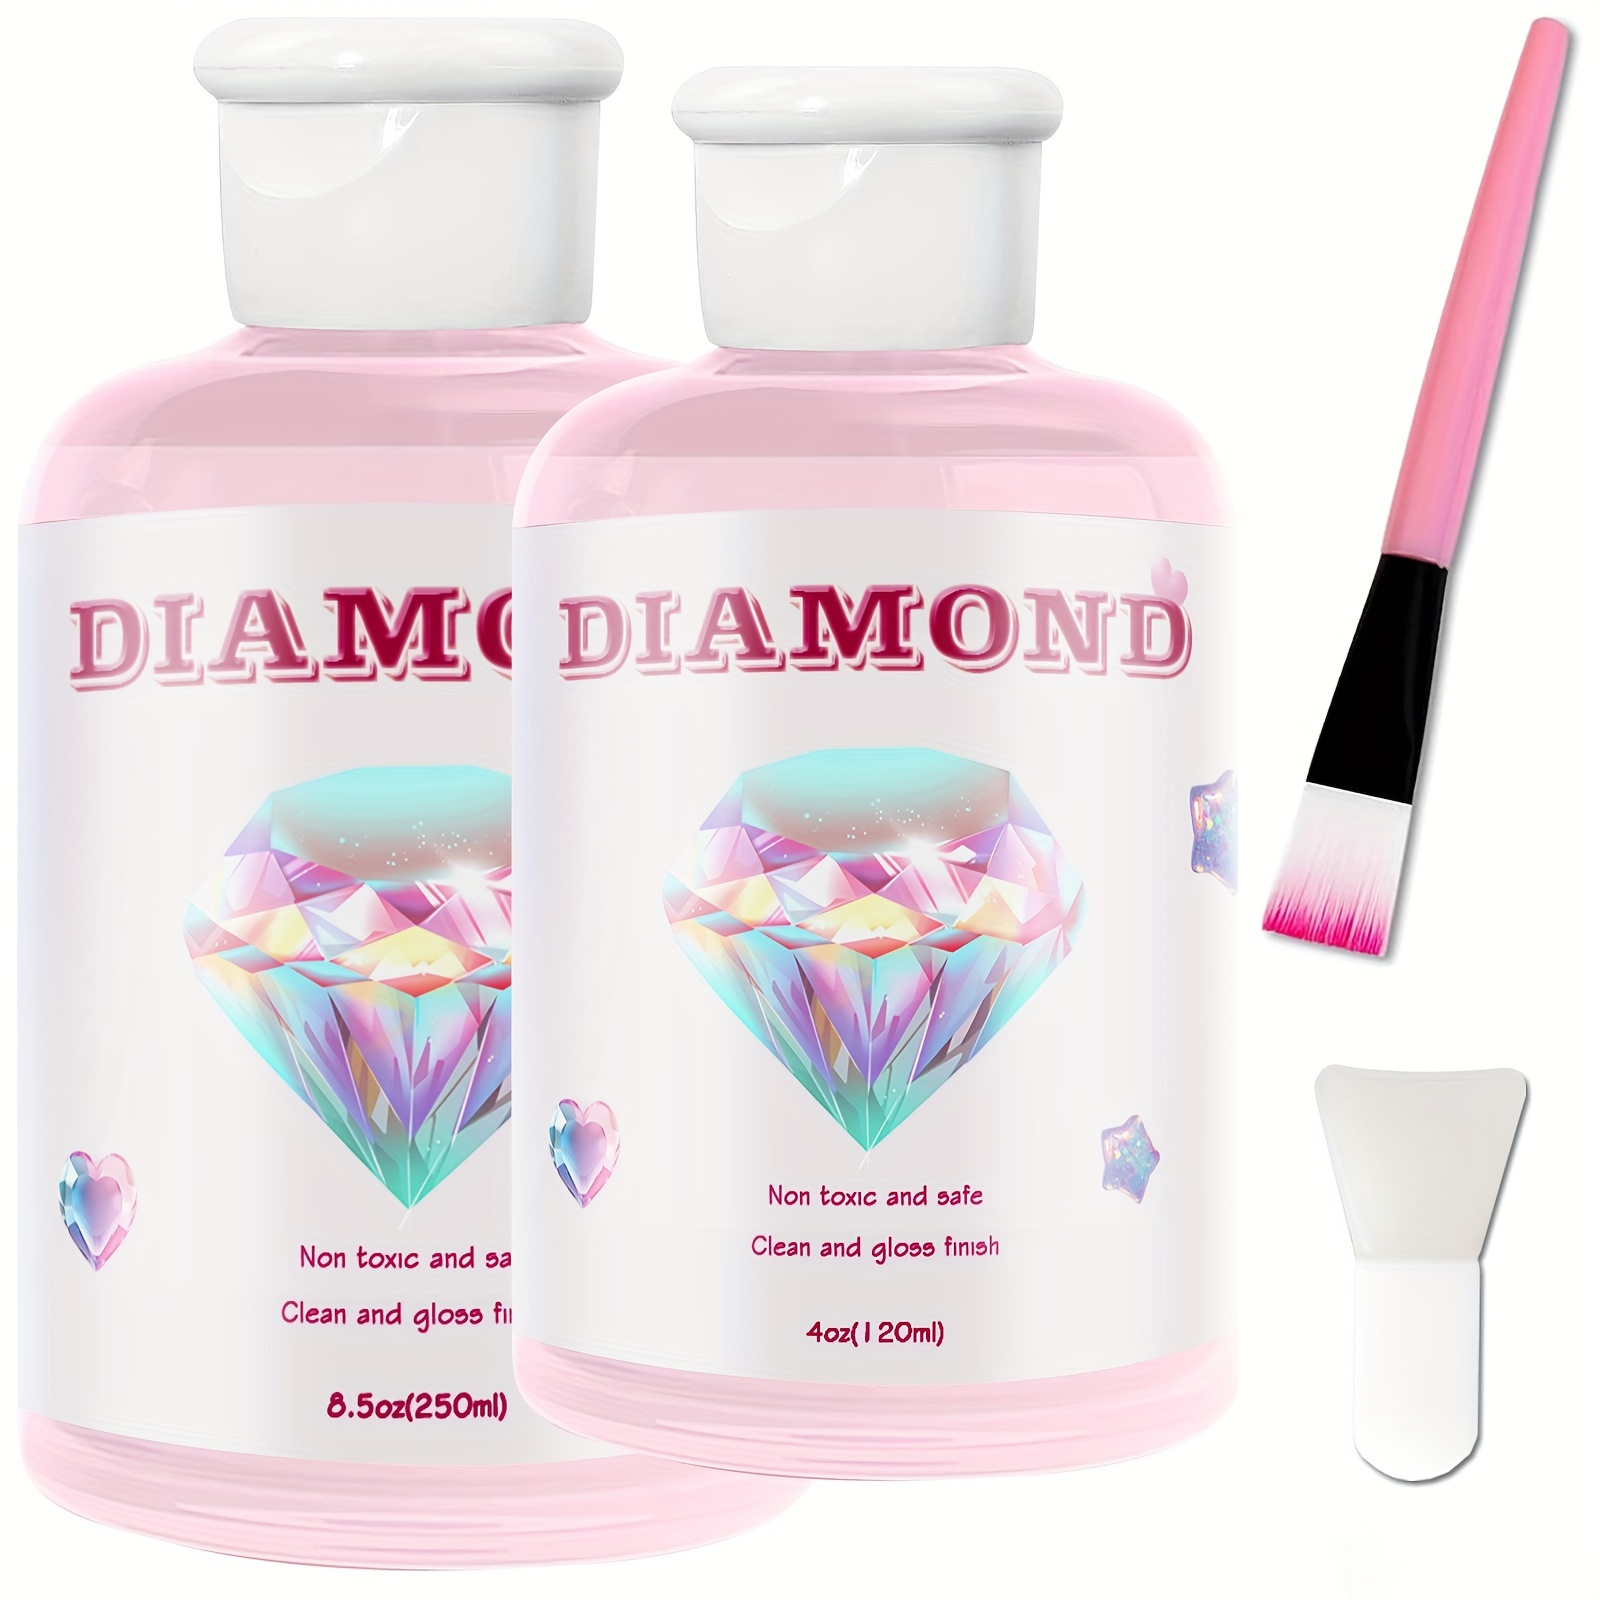 Diamond Painting Sealer Kits 240ML with Brushes, Diamond Art